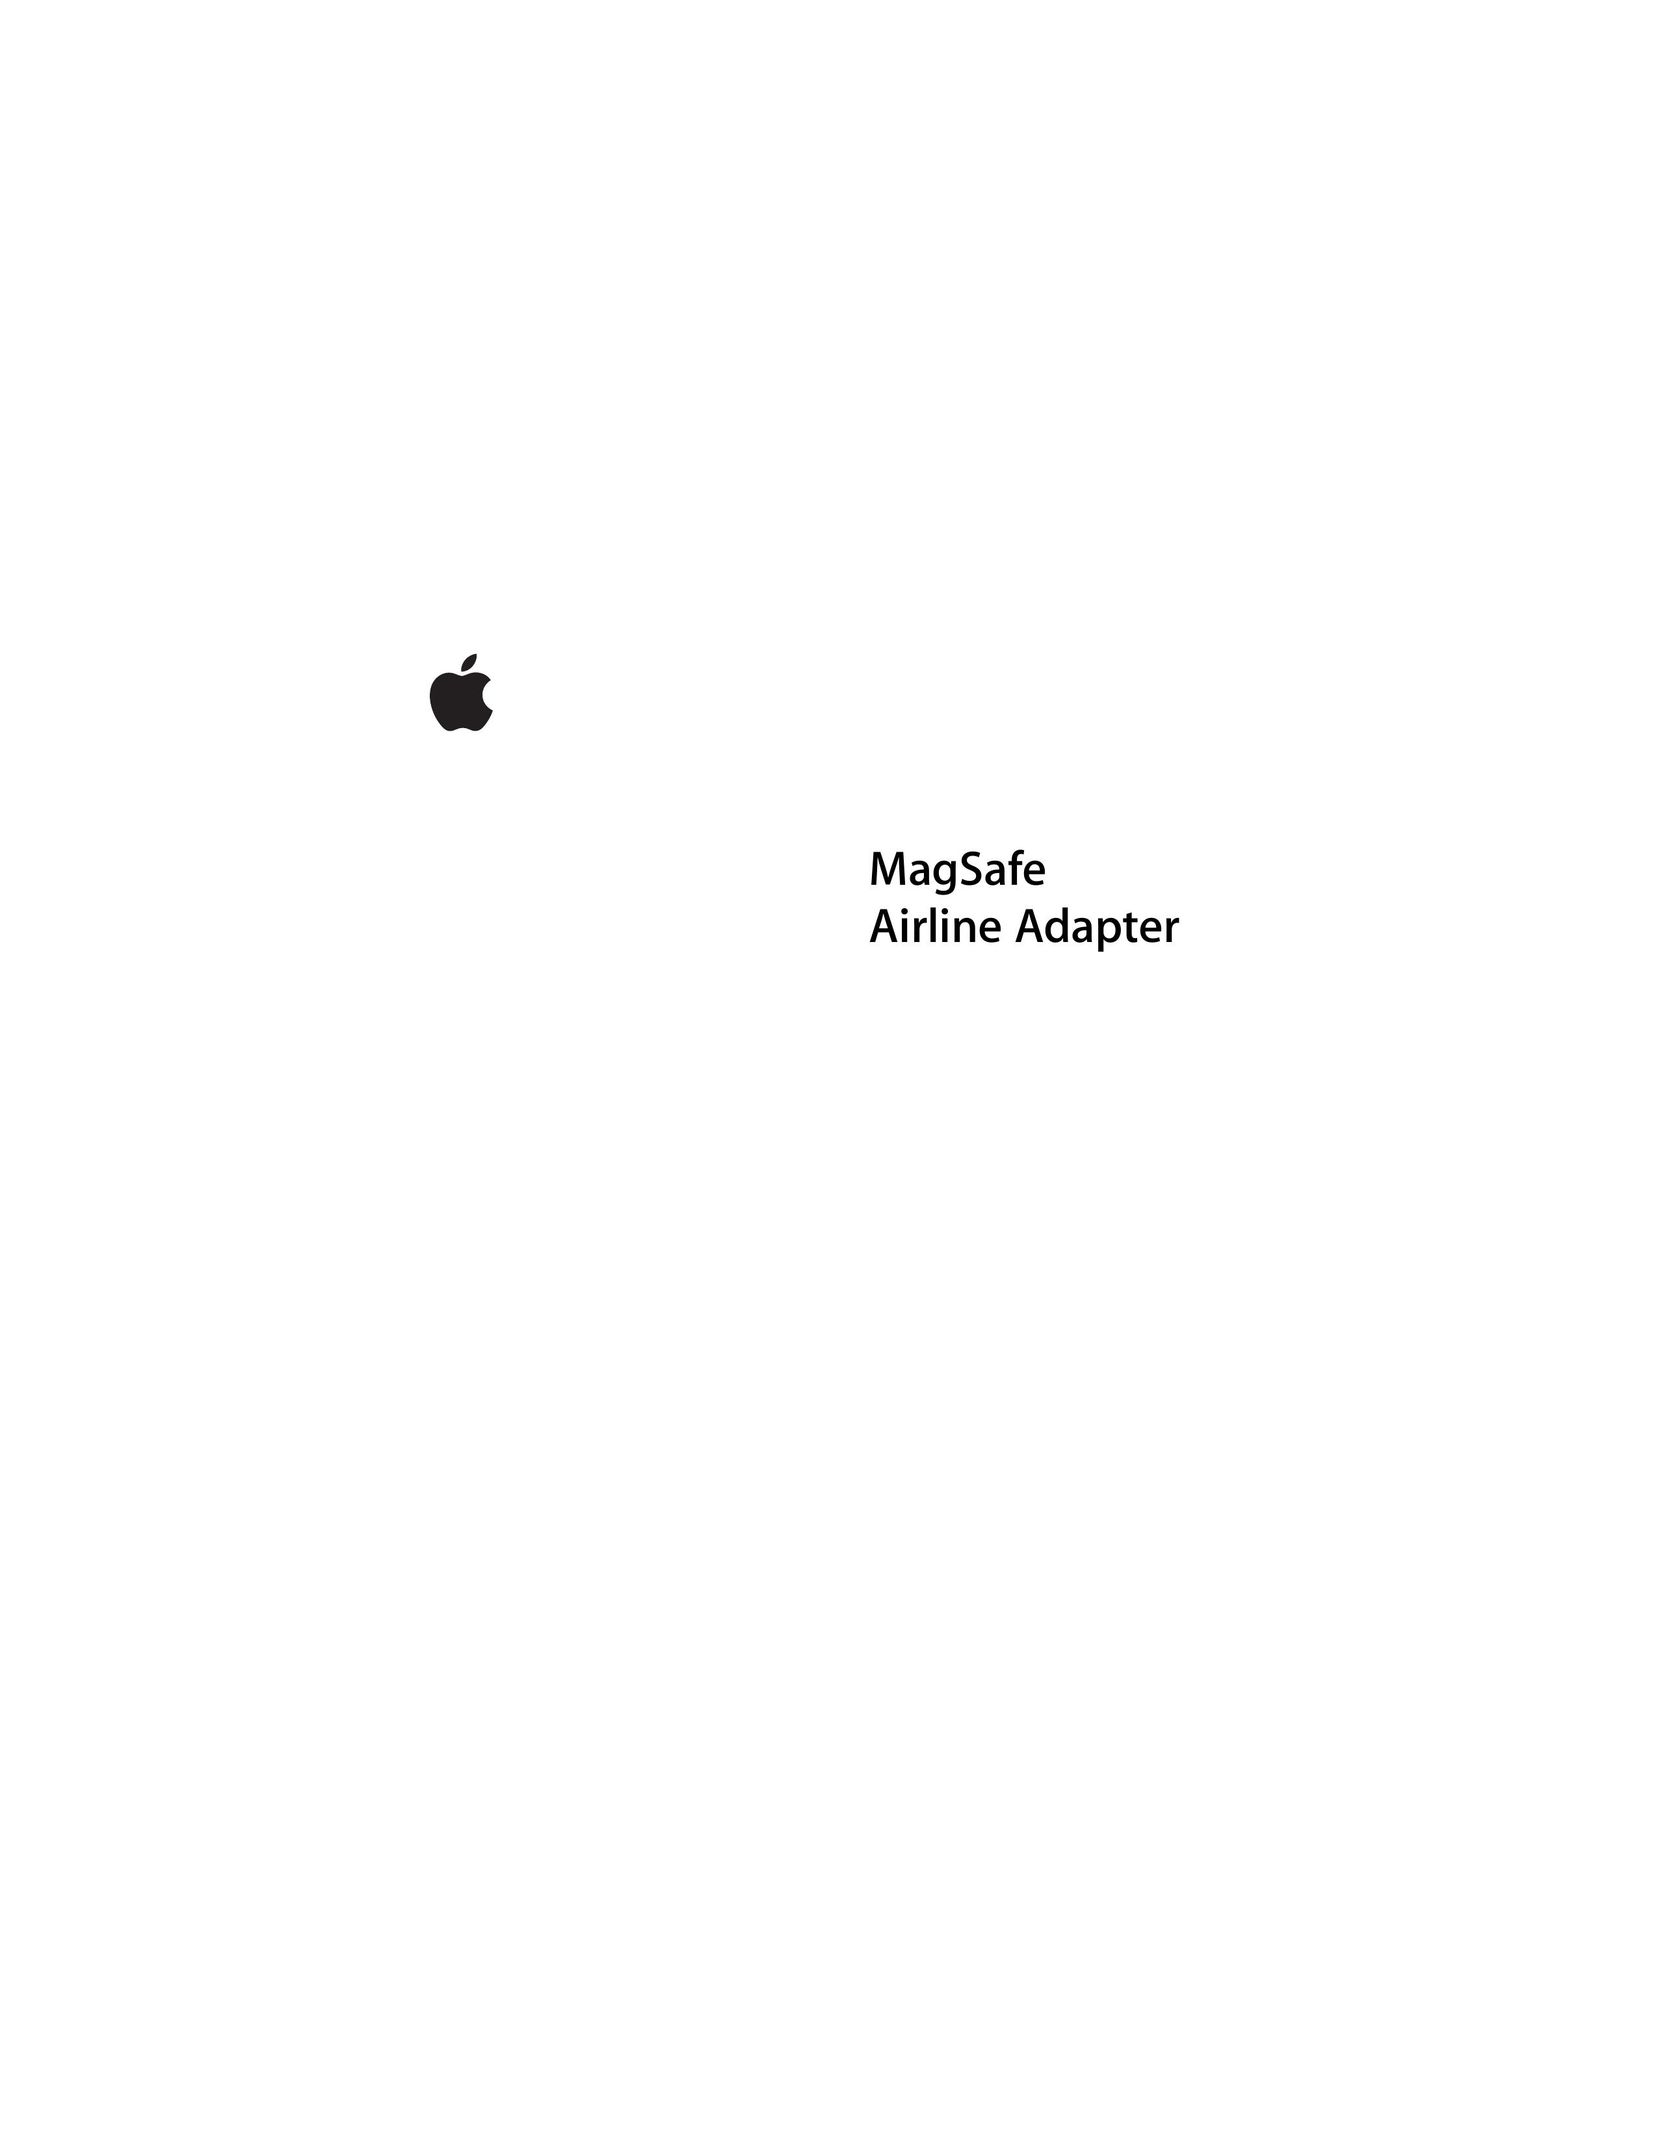 Apple MagSafe Network Card User Manual